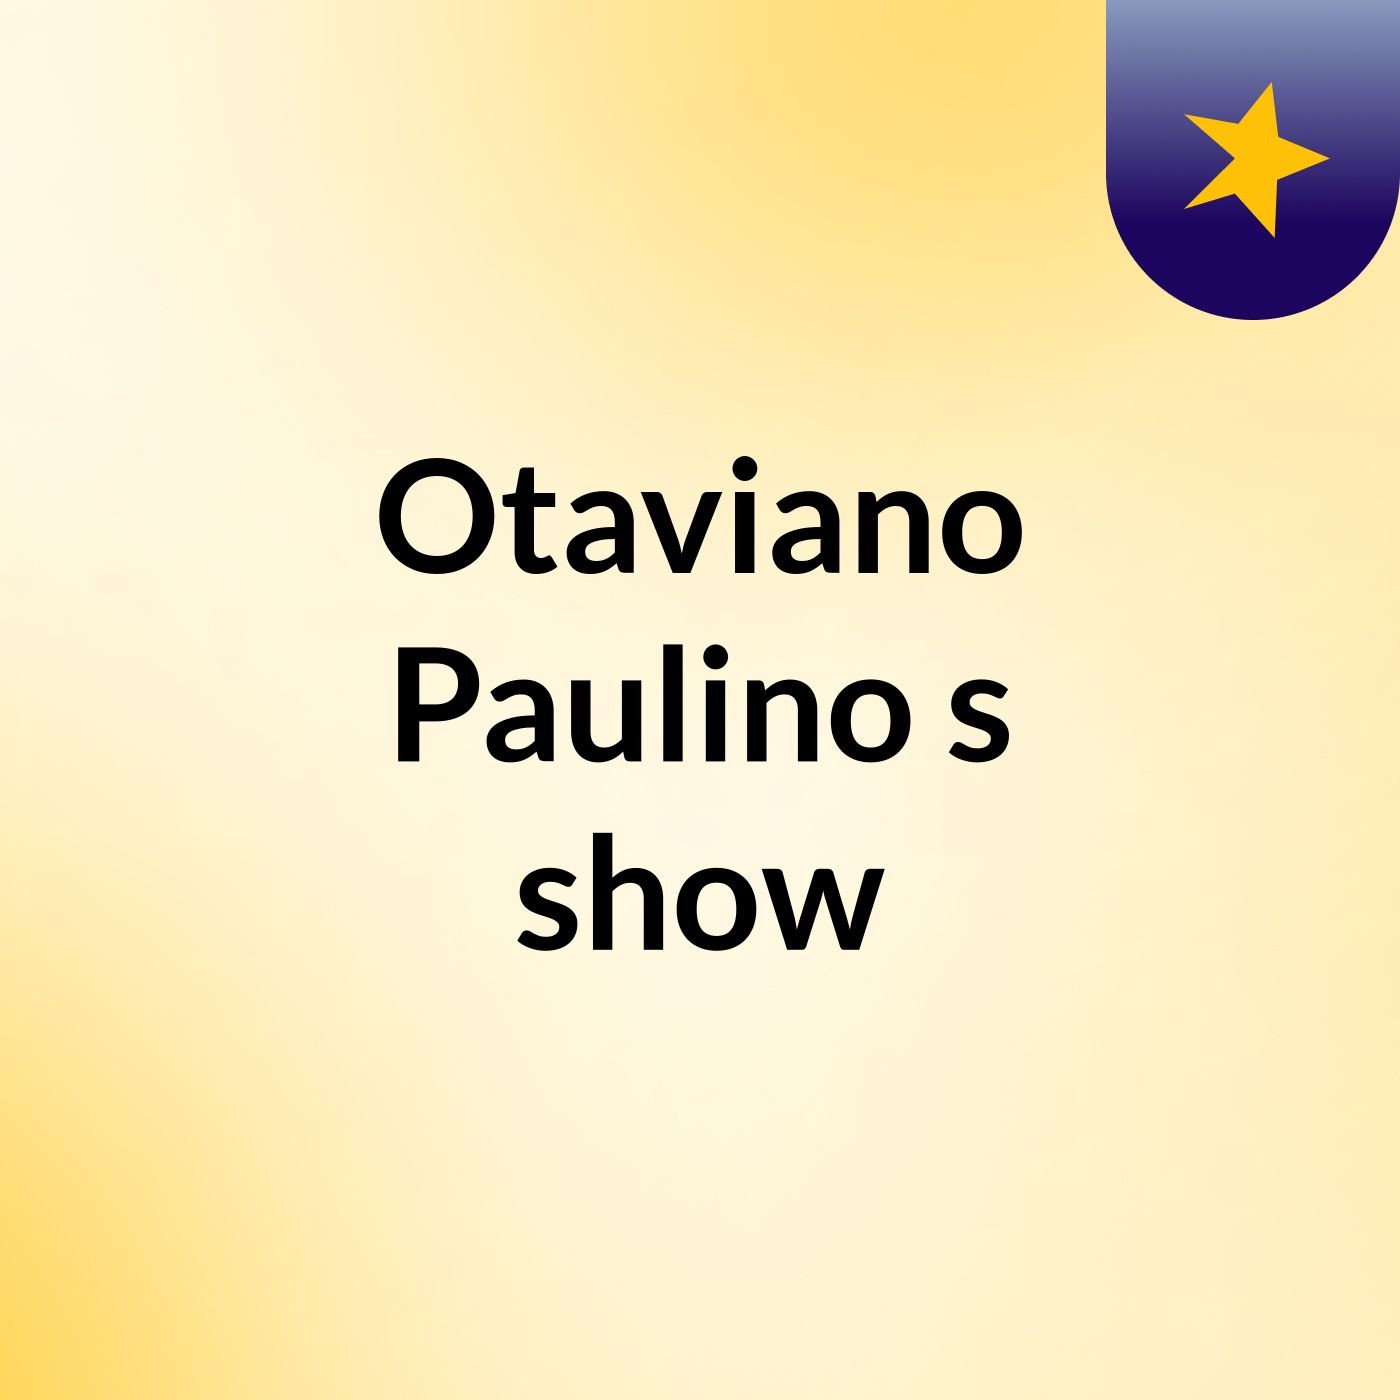 Episódio 32 - Otaviano Paulino's show